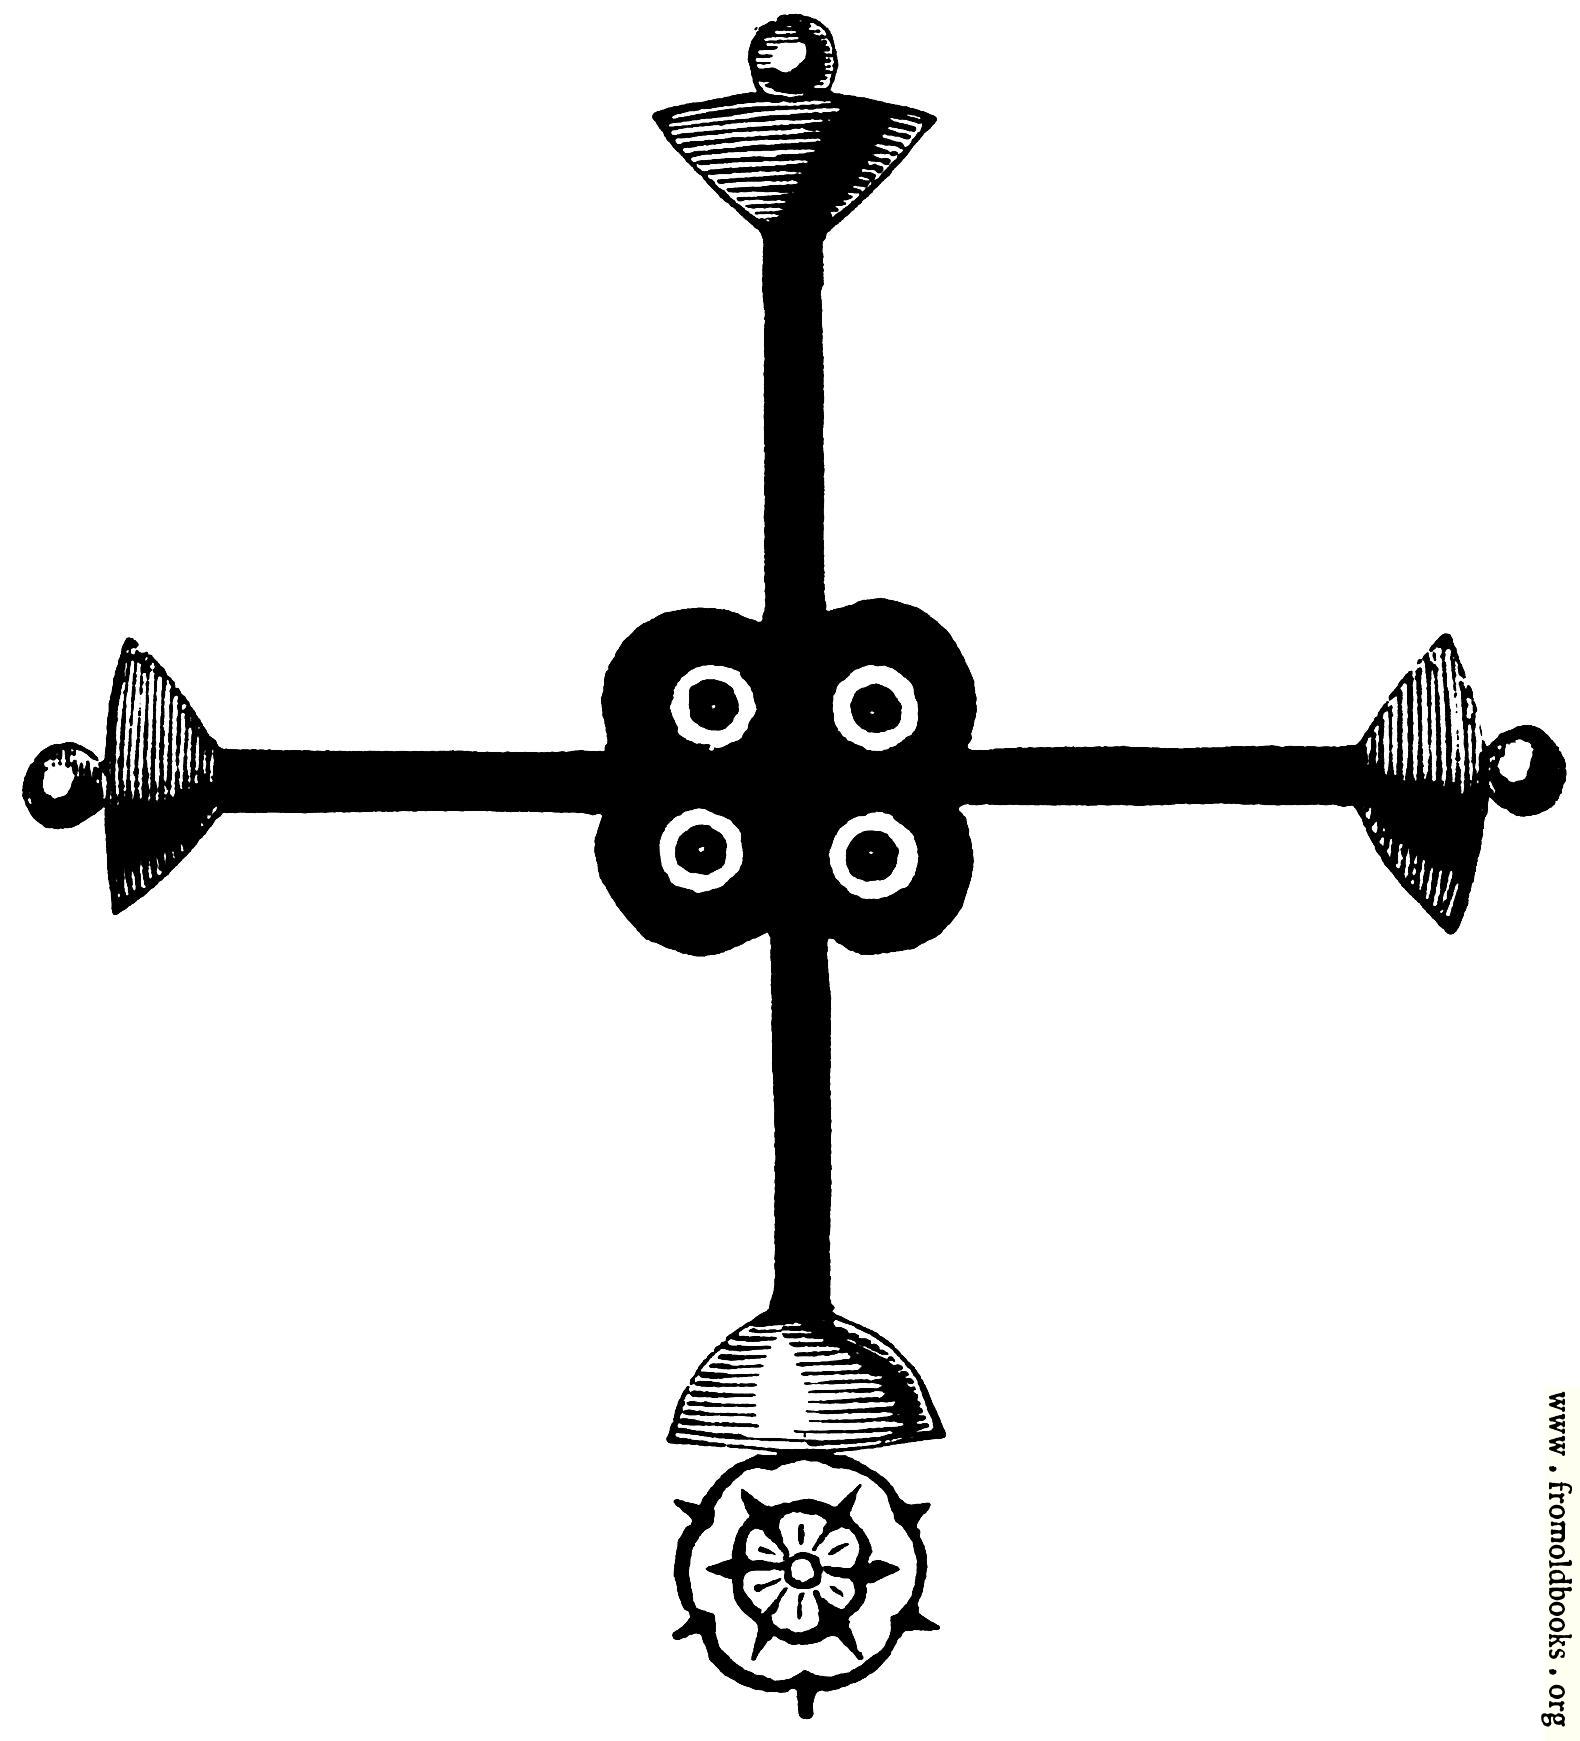 [Picture: 53.21.—Decorative Cross]